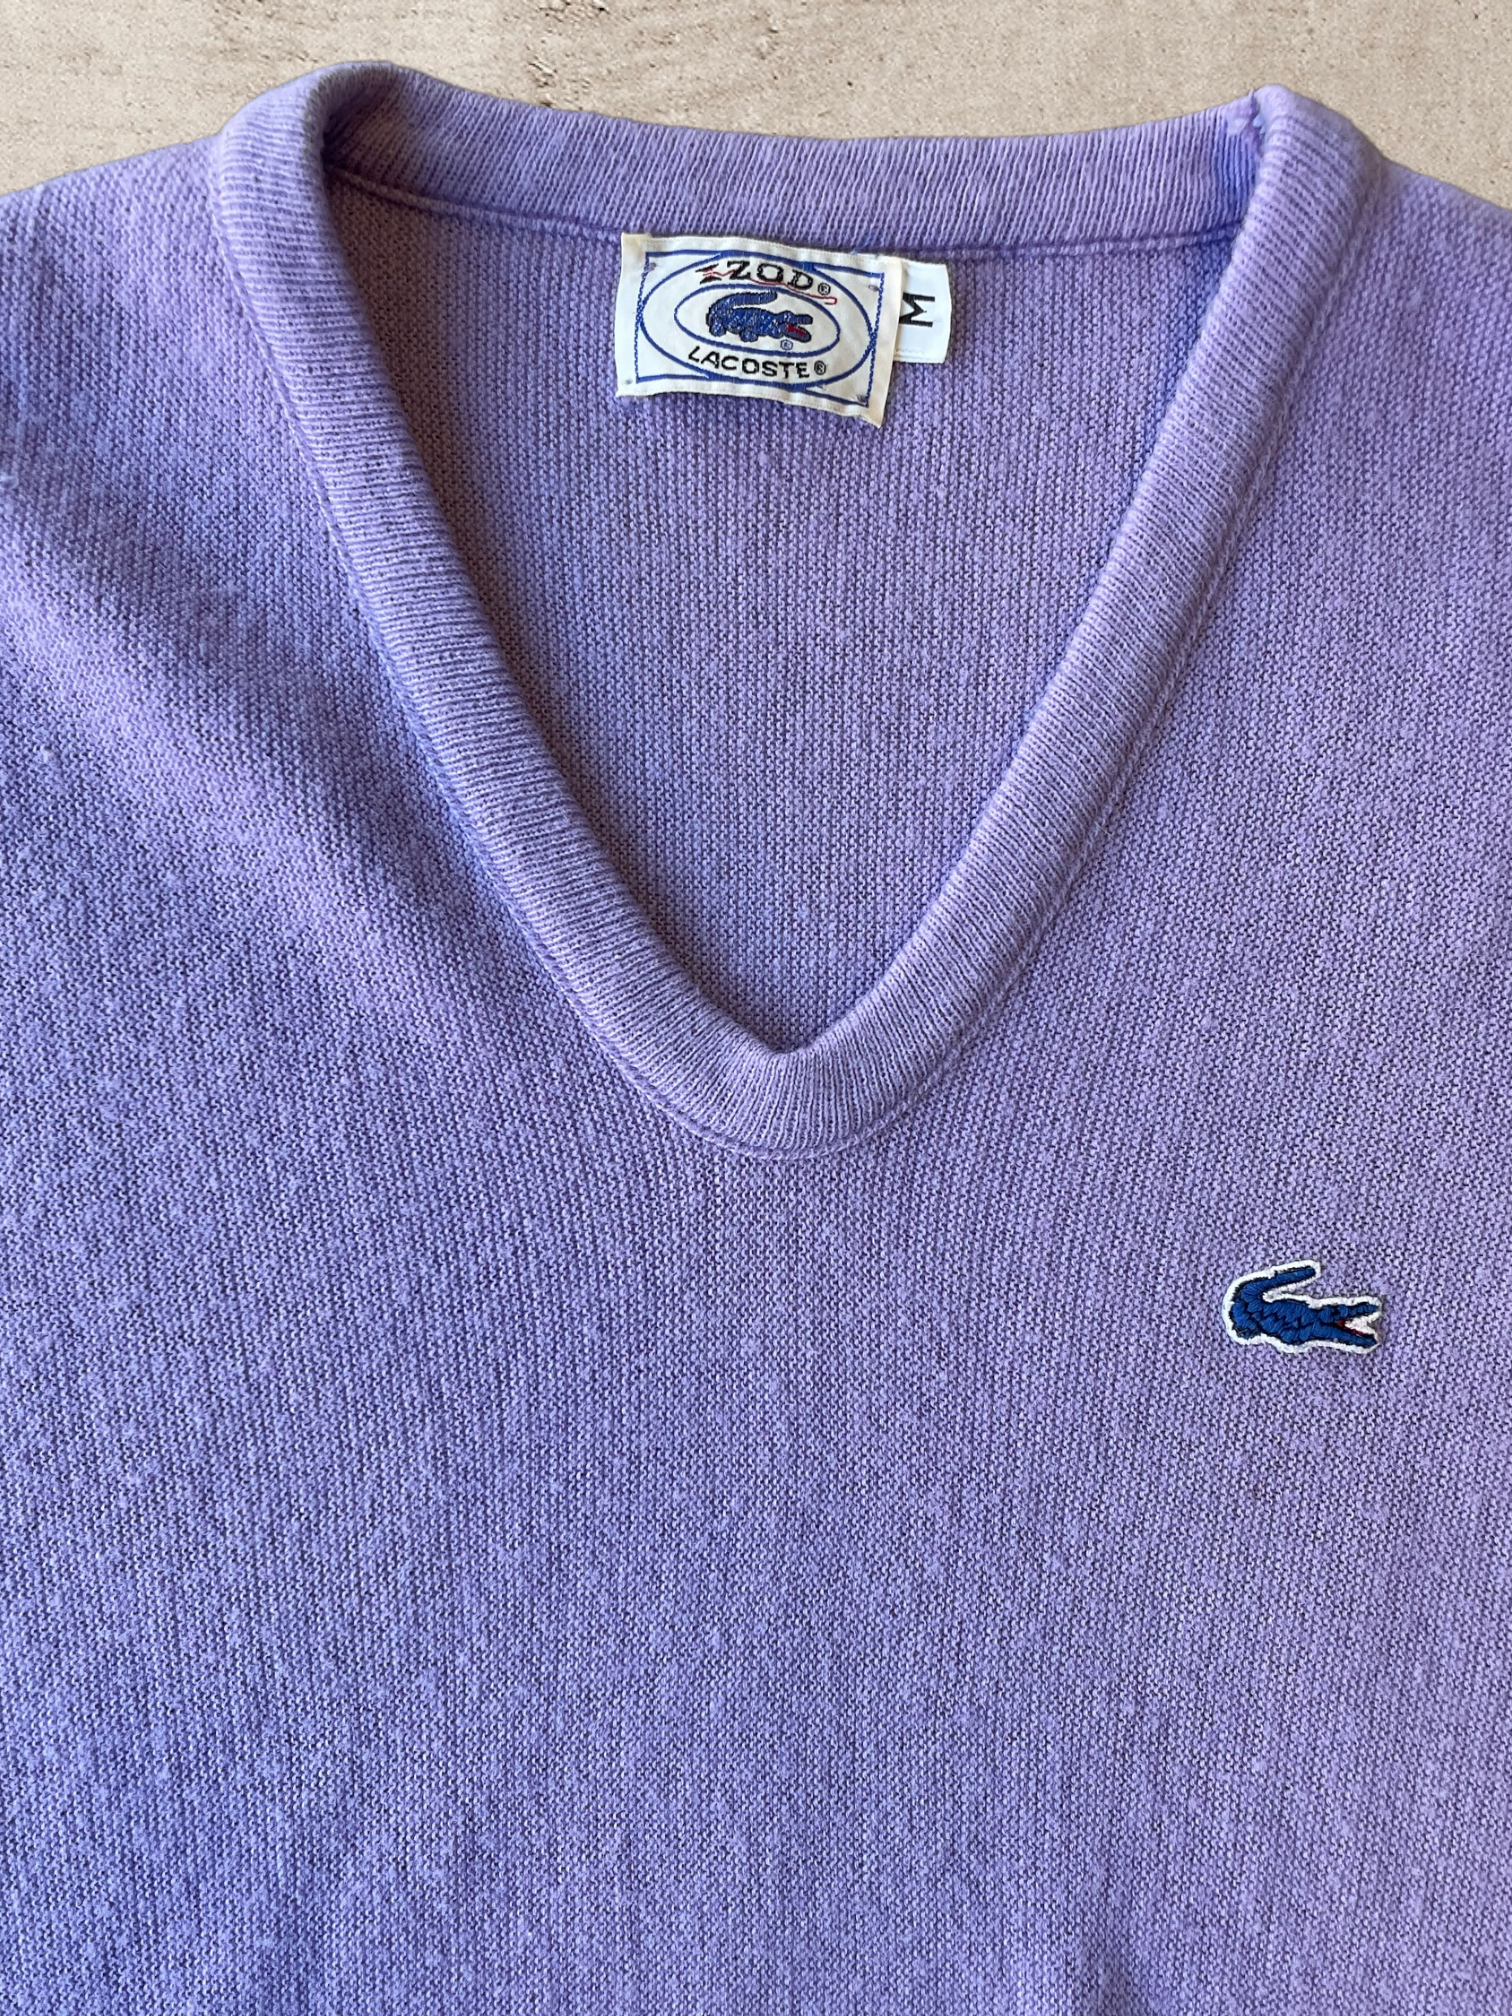 70s Purple Lacoste Vest - Medium